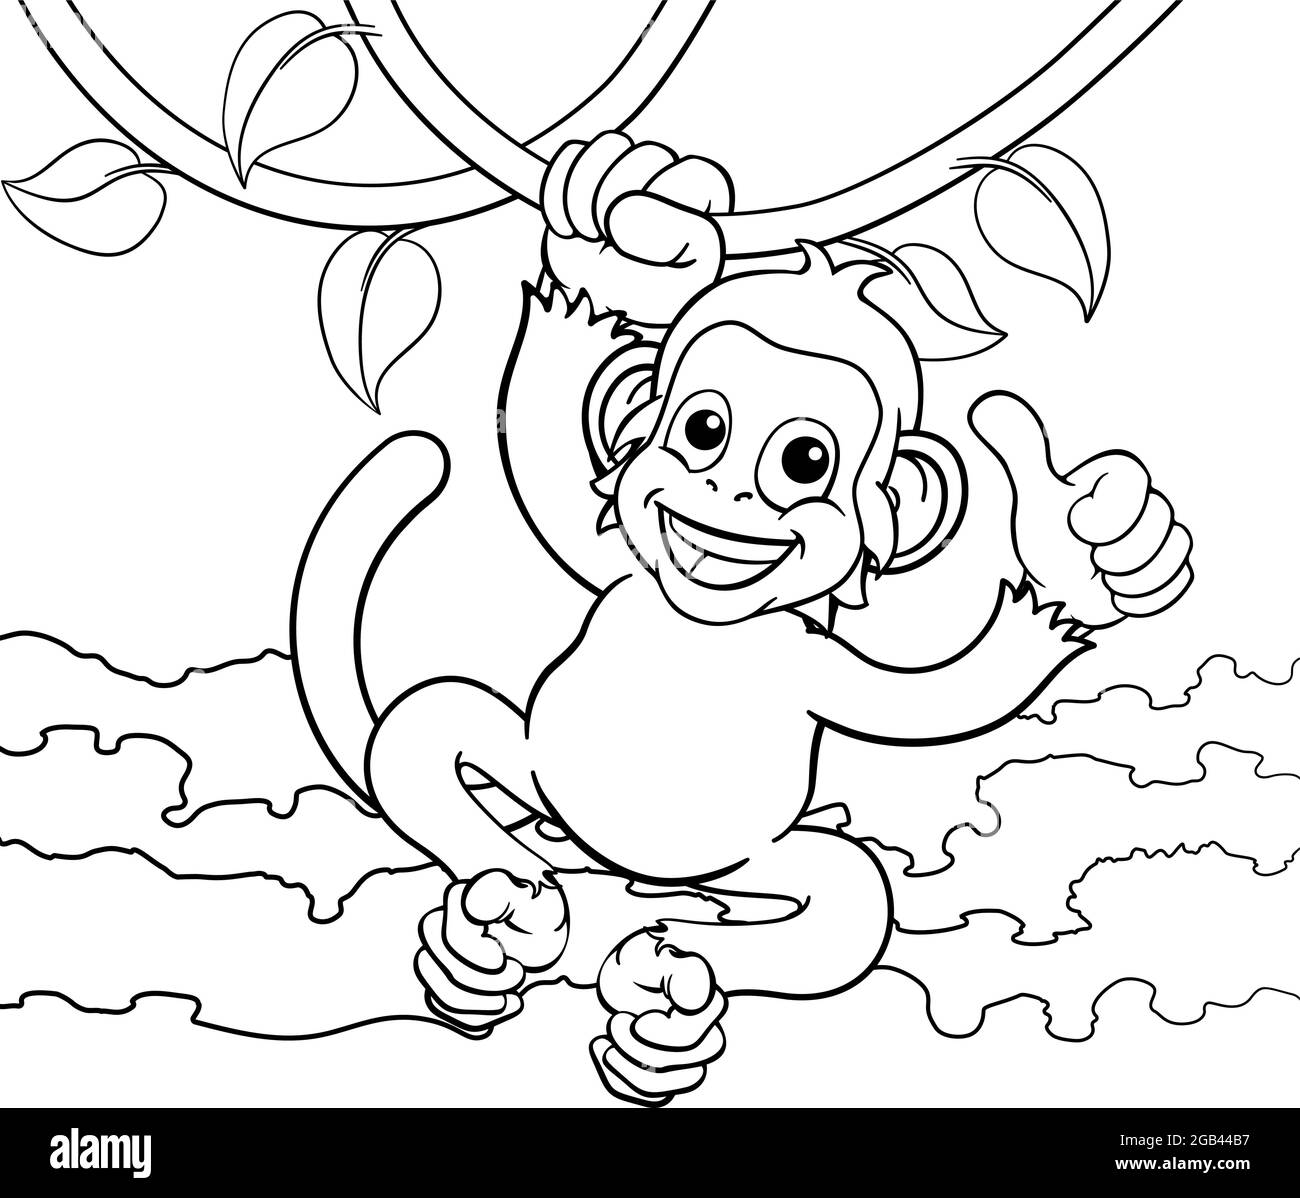 Monkey Singing On Jungle Vines Thumbs Up Cartoon Stock Vector Image ...